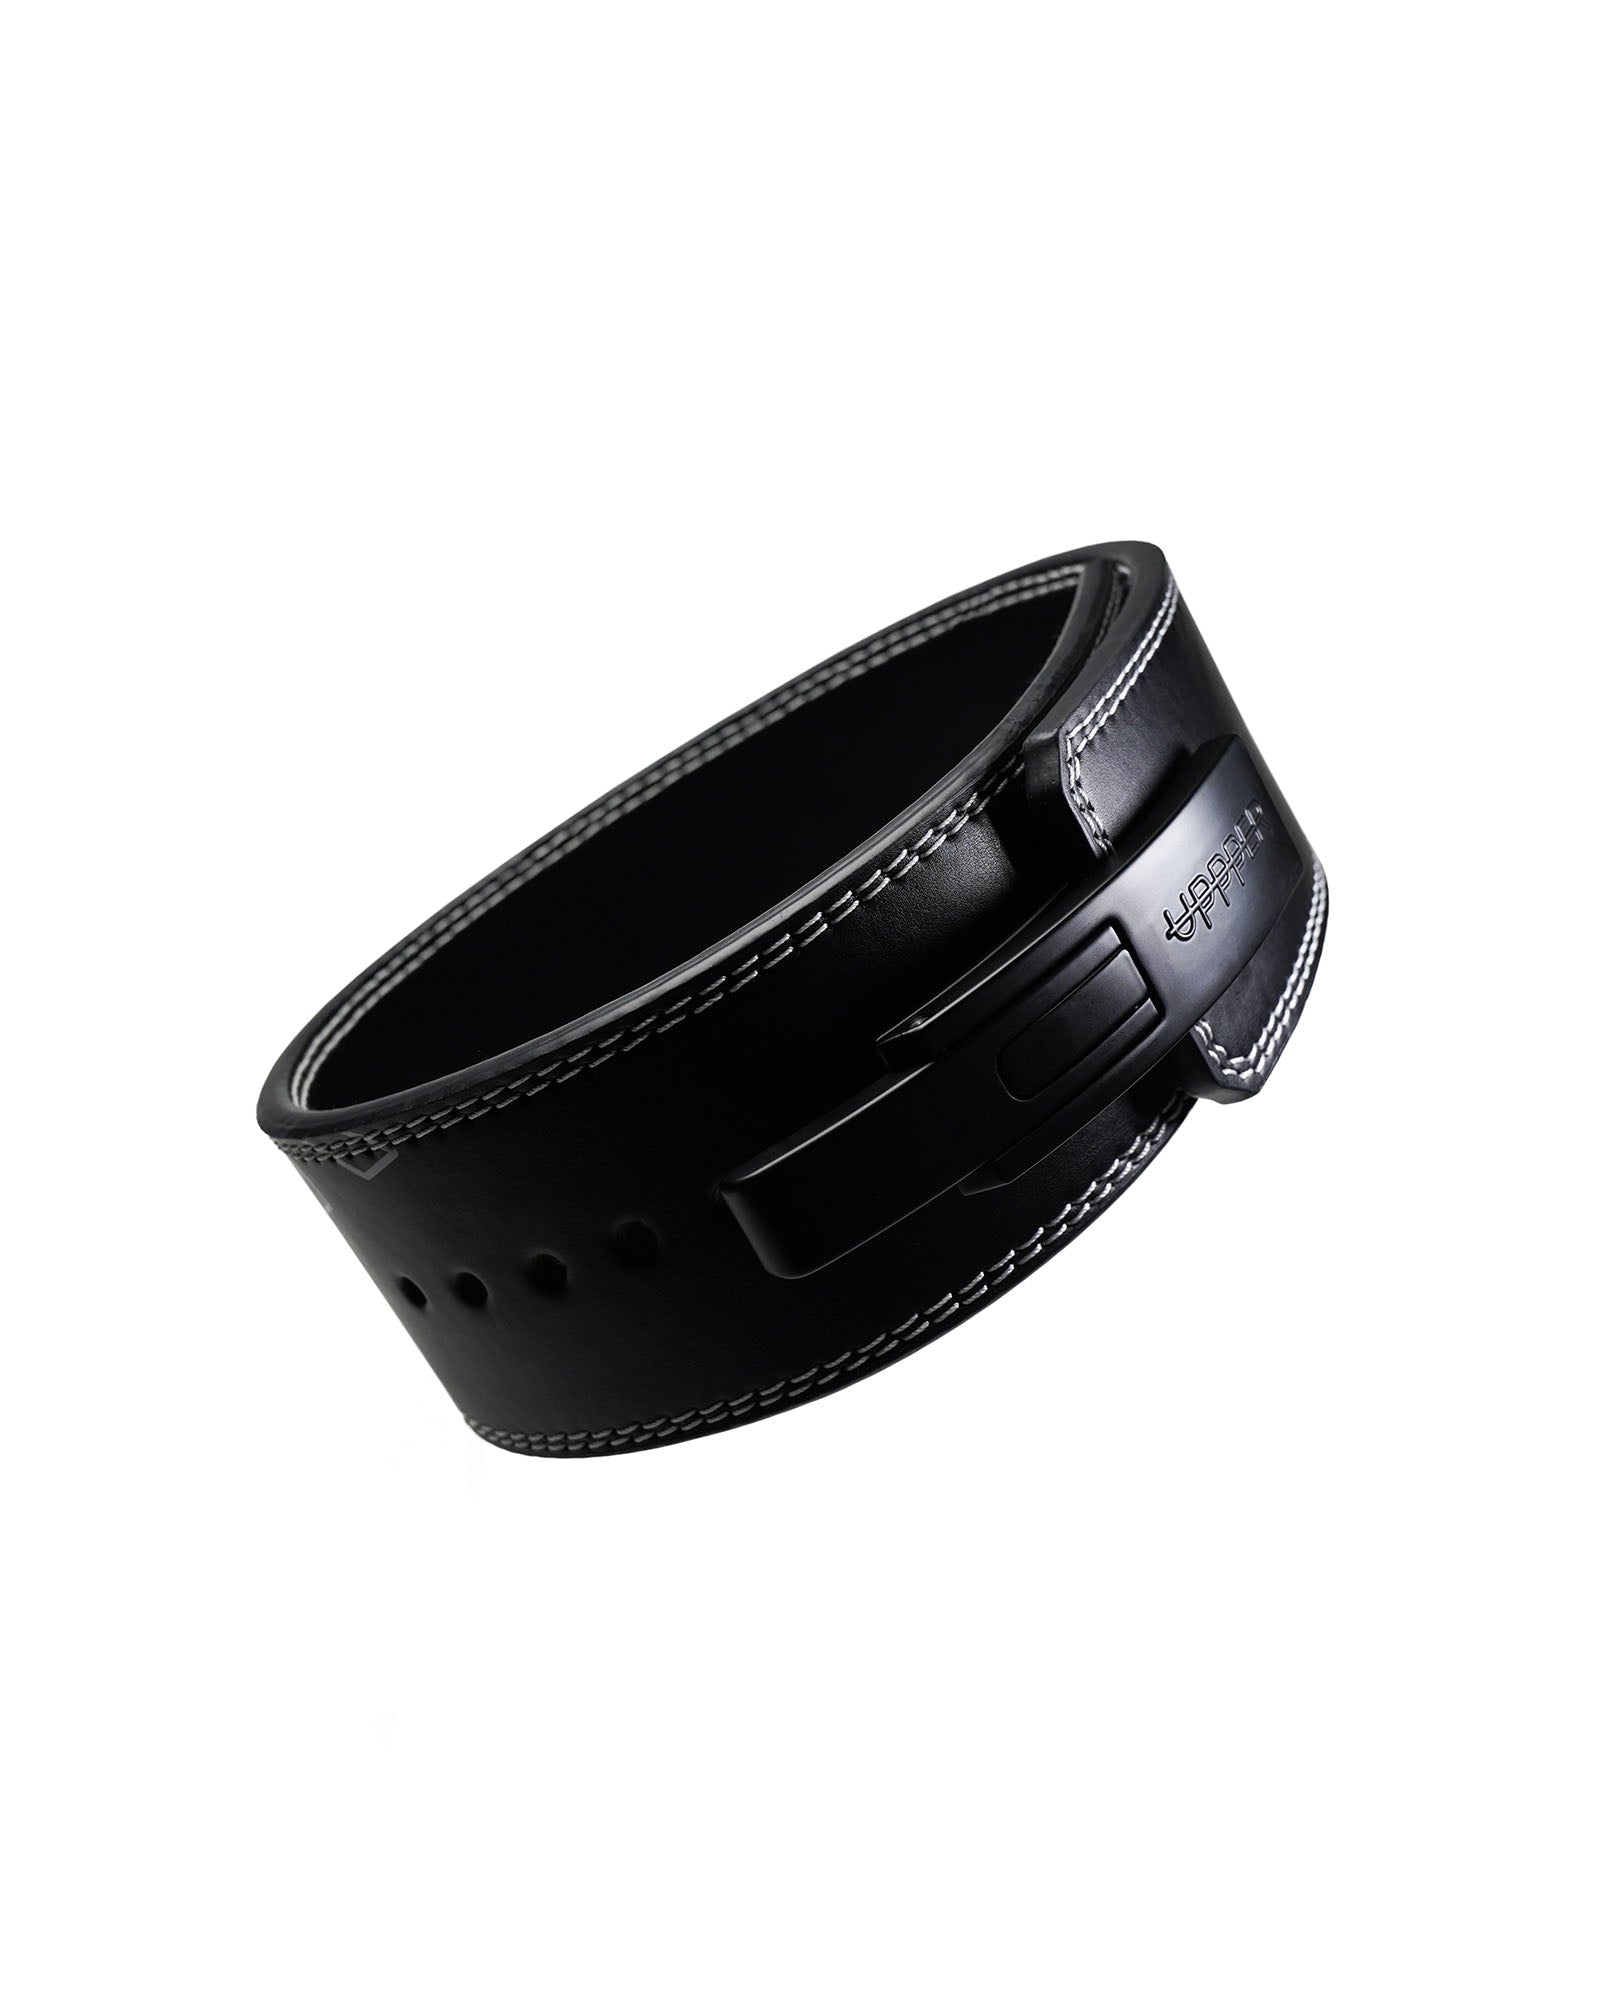 10mm Lever Belt - Black - Rise